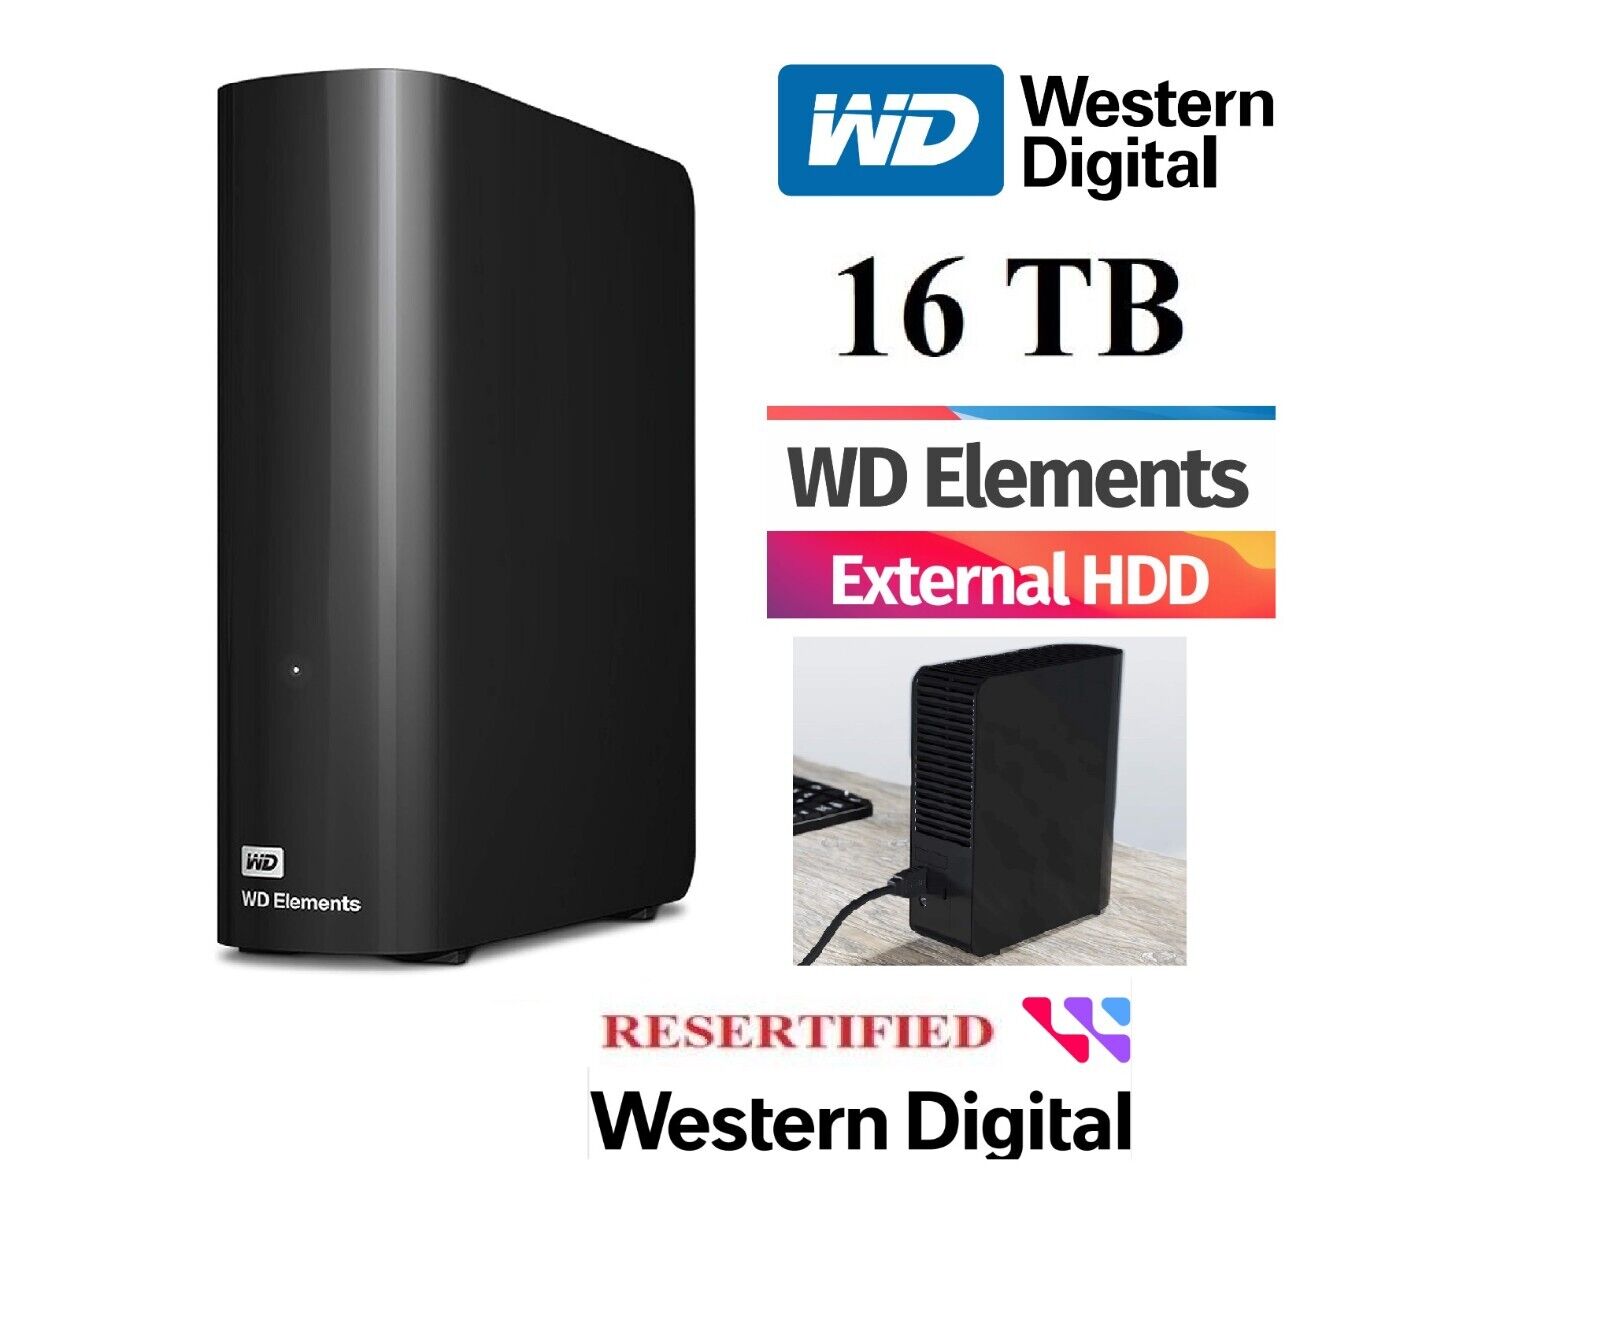 WD Elements 16TB External Hard Drive HDD USB 3.0 WDBWLG0160HBK-NESN Recertified